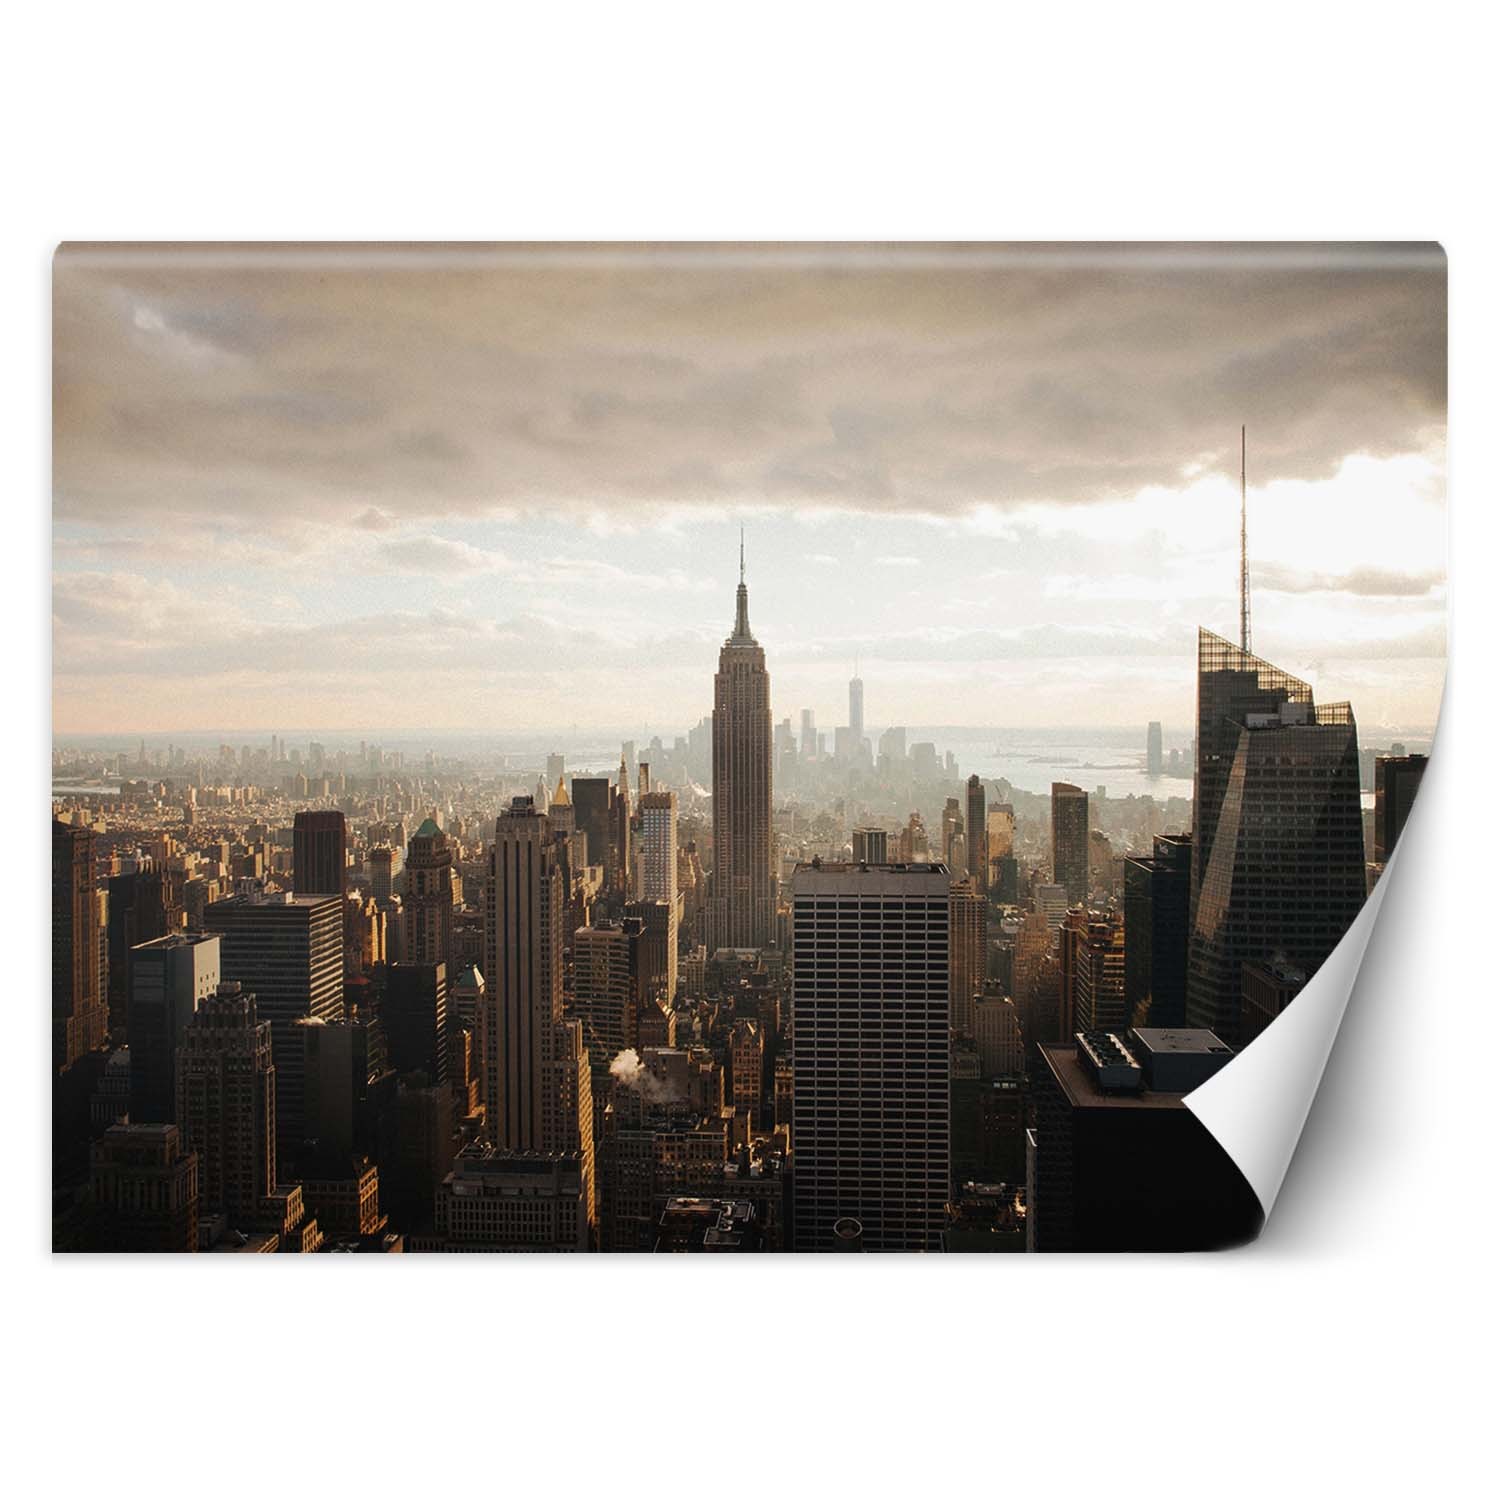 Trend24 – Behang – New York – Manhattan – Vliesbehang – Fotobehang – Behang Woonkamer – 400x280x2 cm – Incl. behanglijm